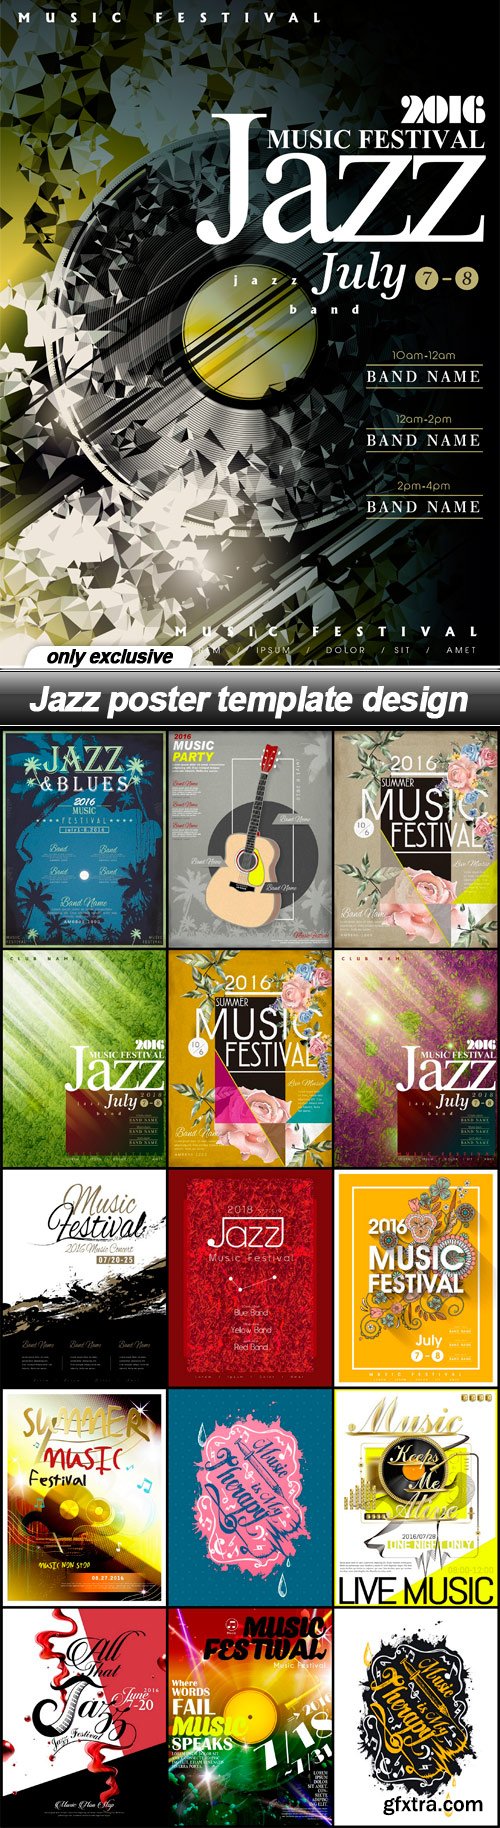 Jazz poster template design - 16 EPS